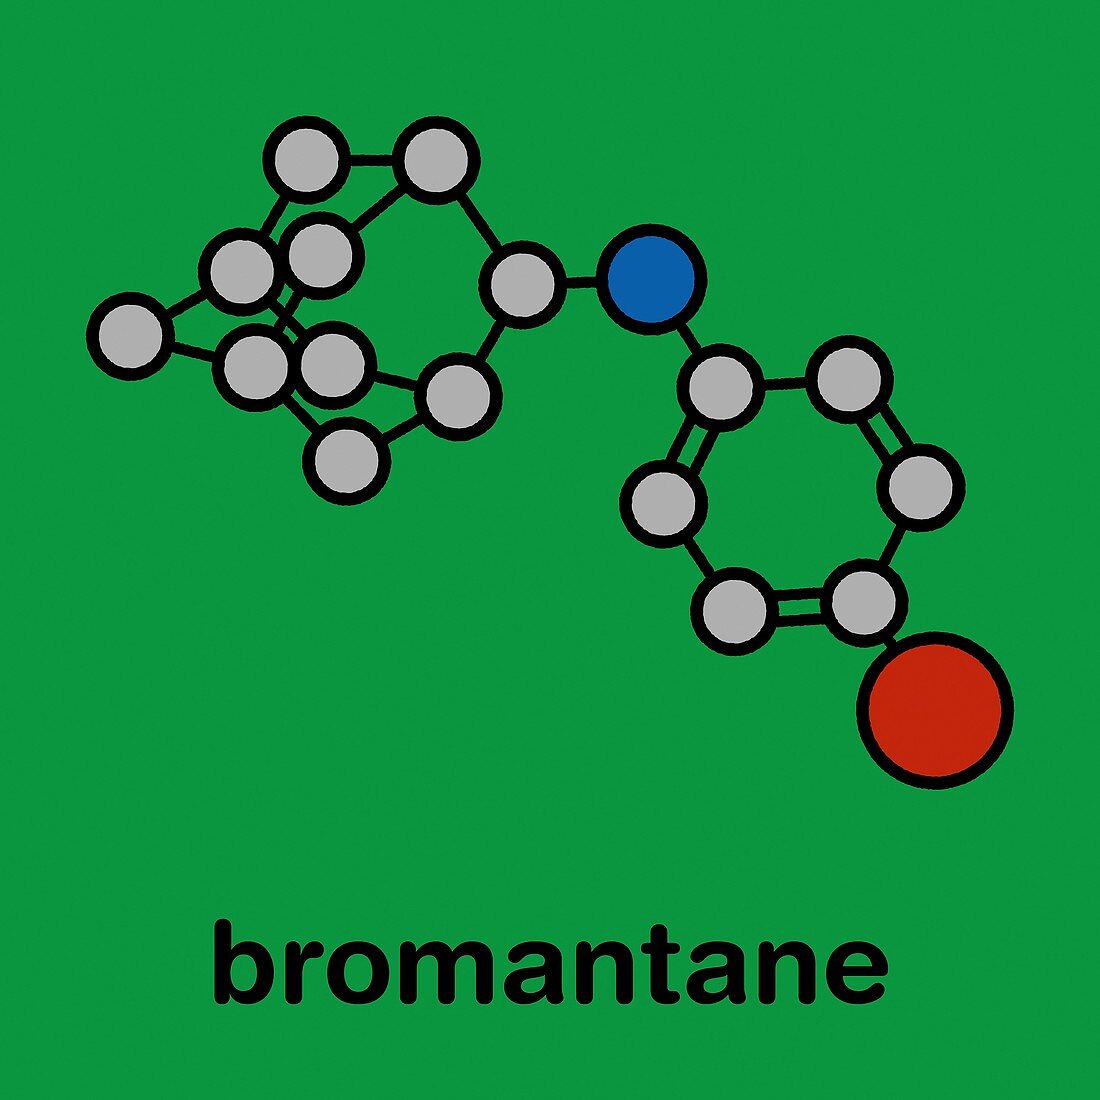 Bromantane asthenia drug molecule, illustration